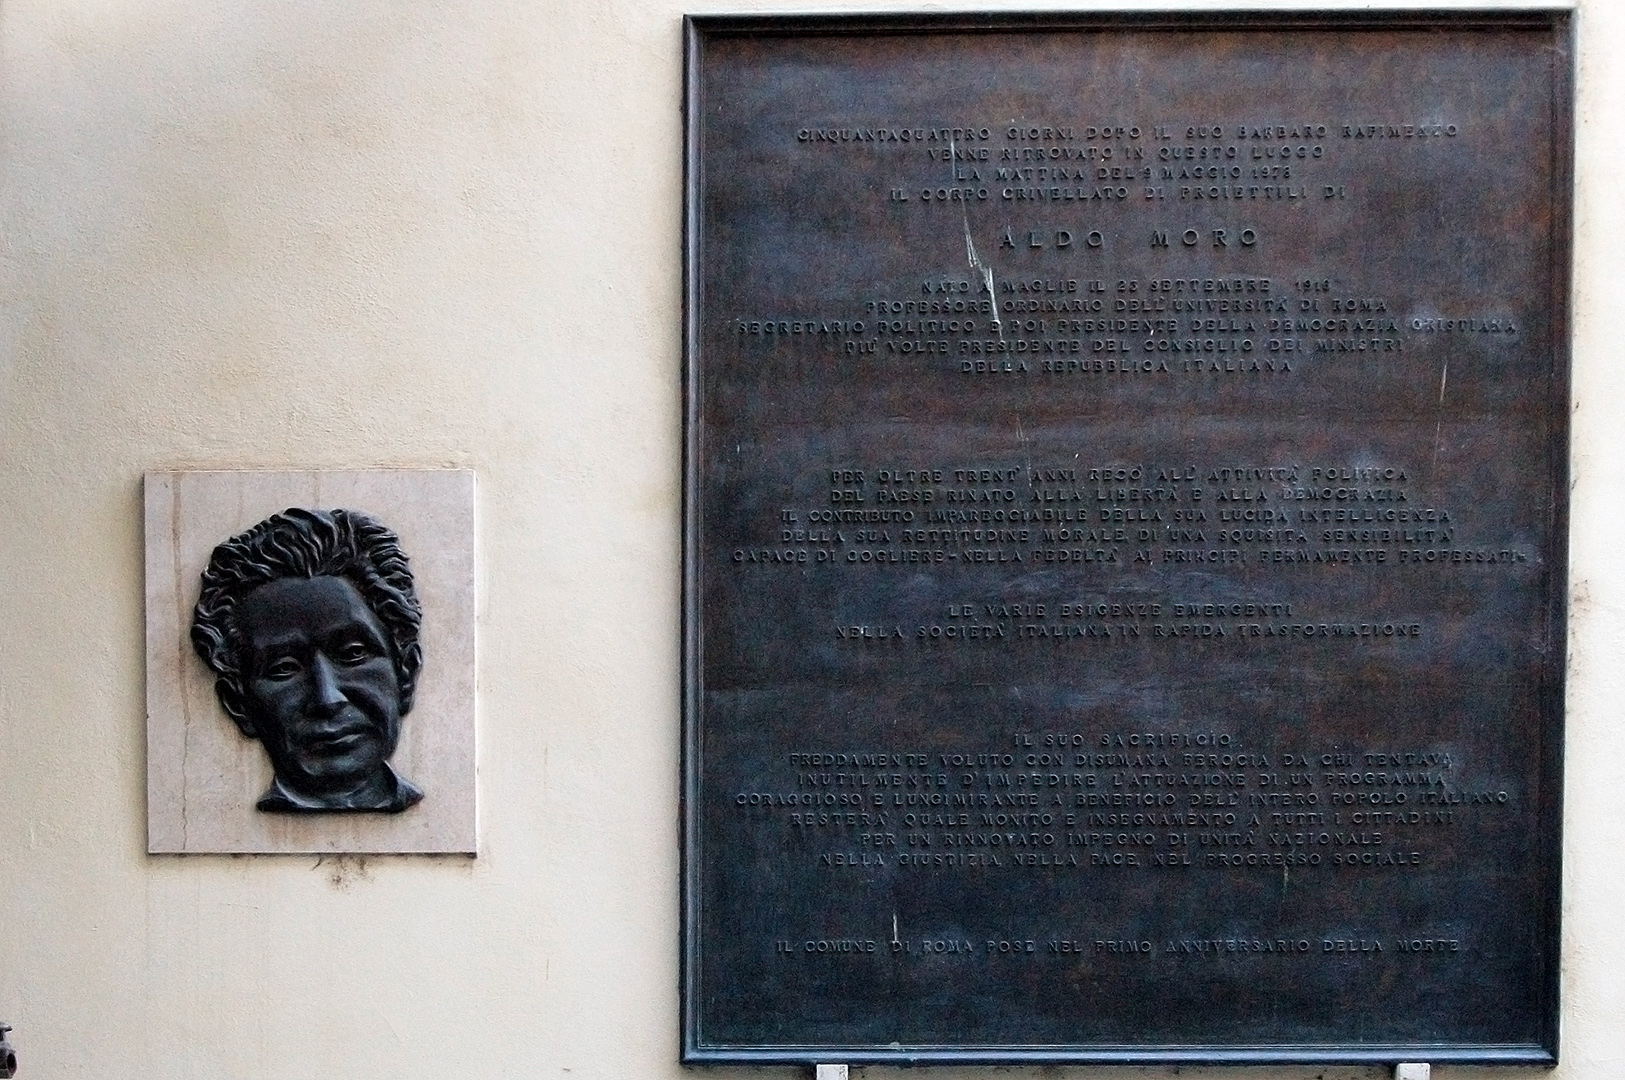 Herinneringsmonument voor Aldo Moro, Rome, Memorial to Aldo Moro, Rome, Italy